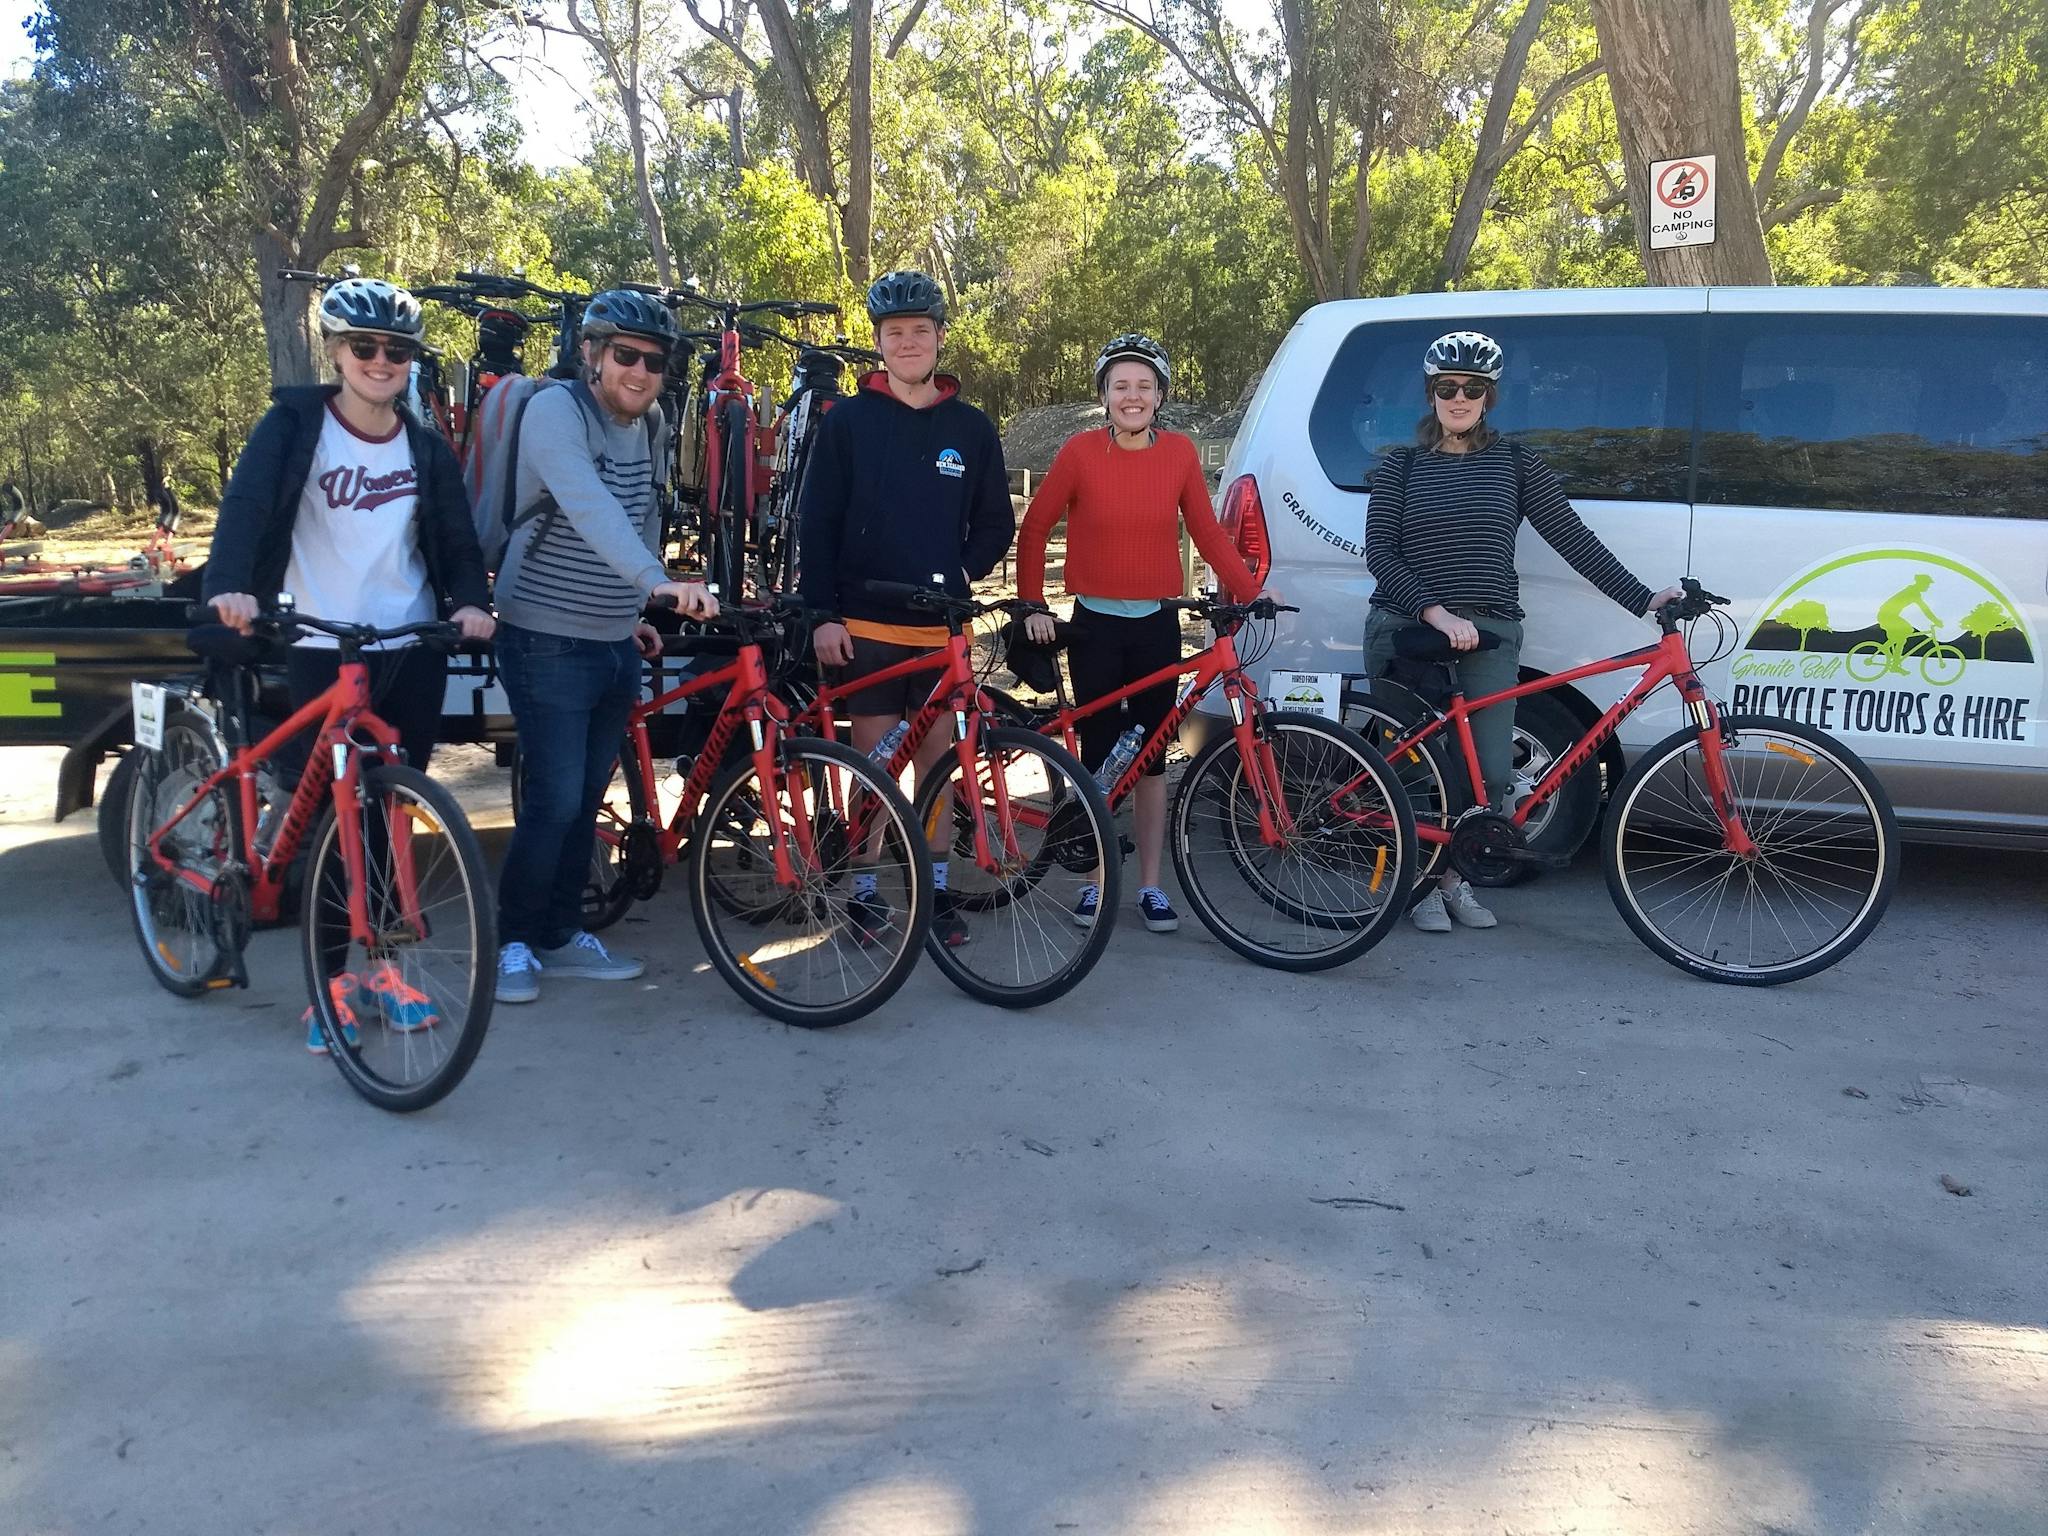 Bikes and riders at the van